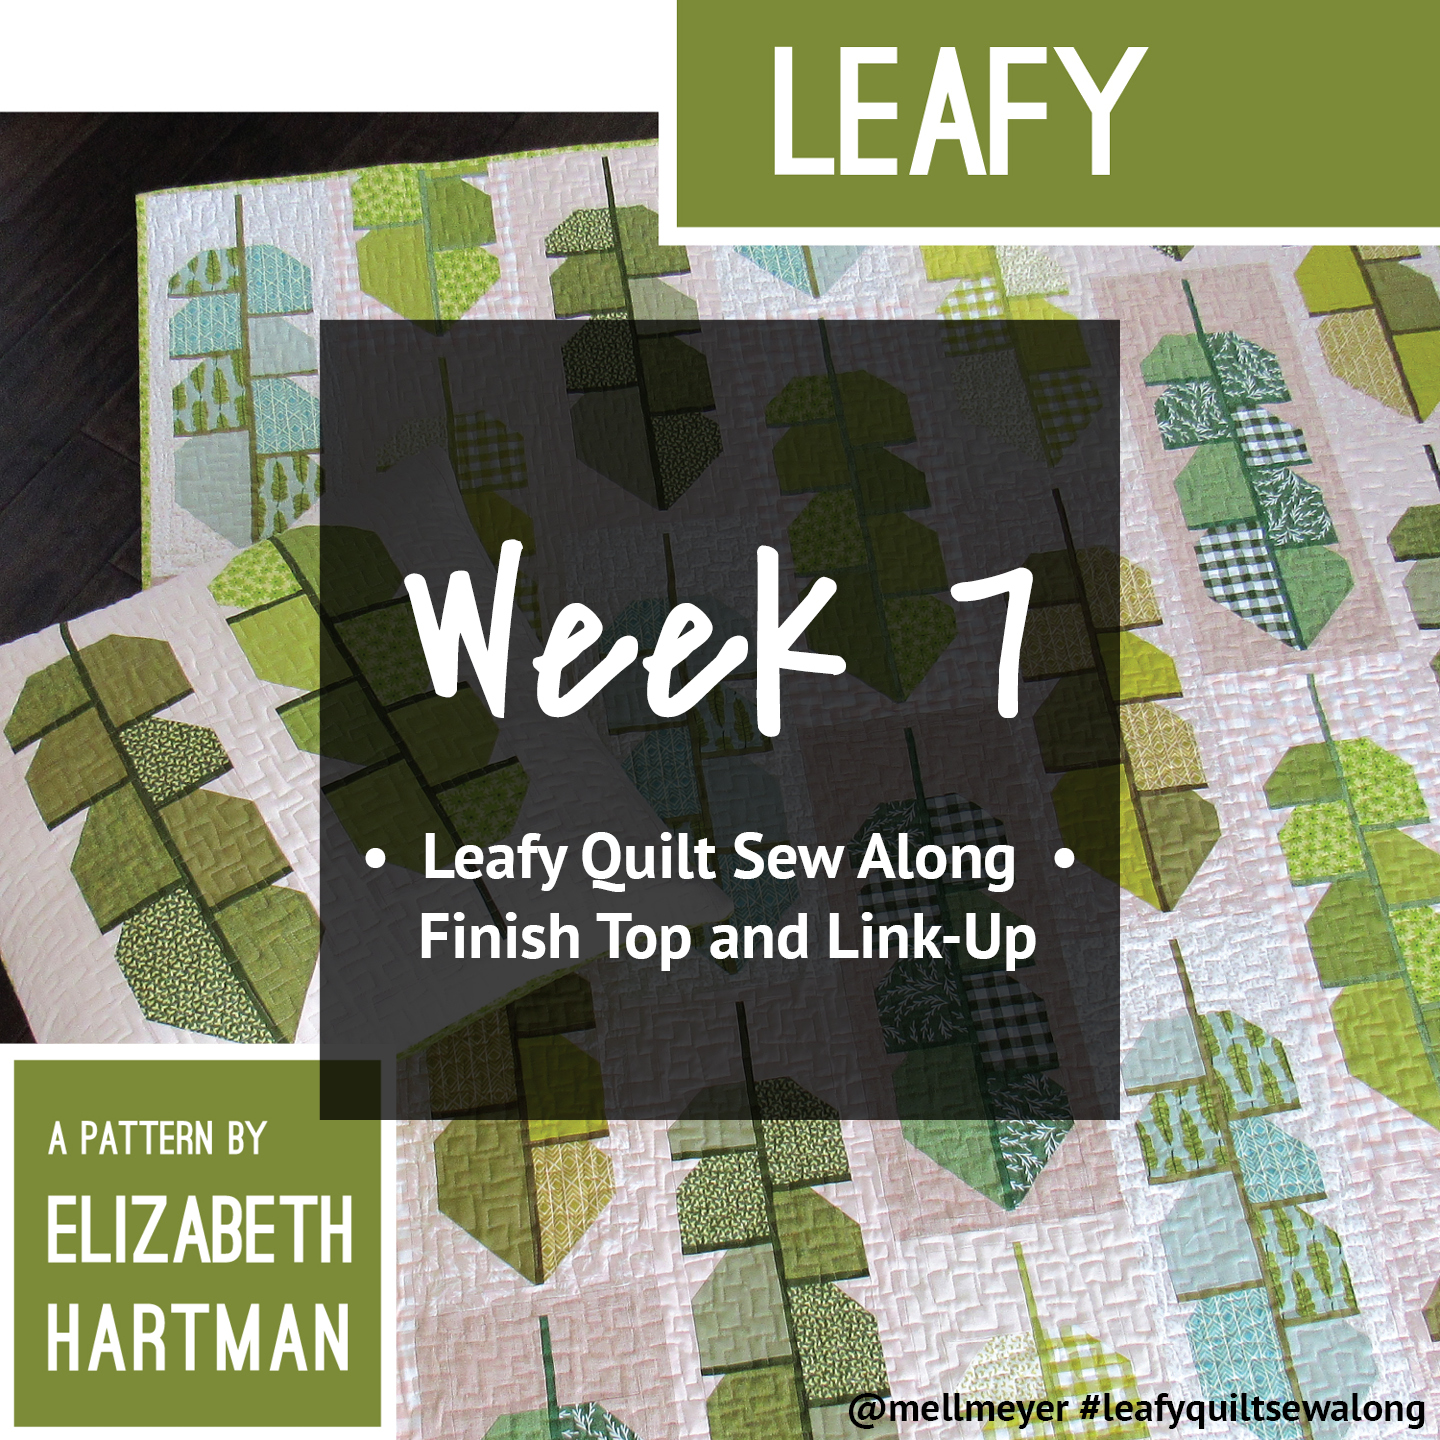 Leafy Quilt Sew Along | mellmeyer.de